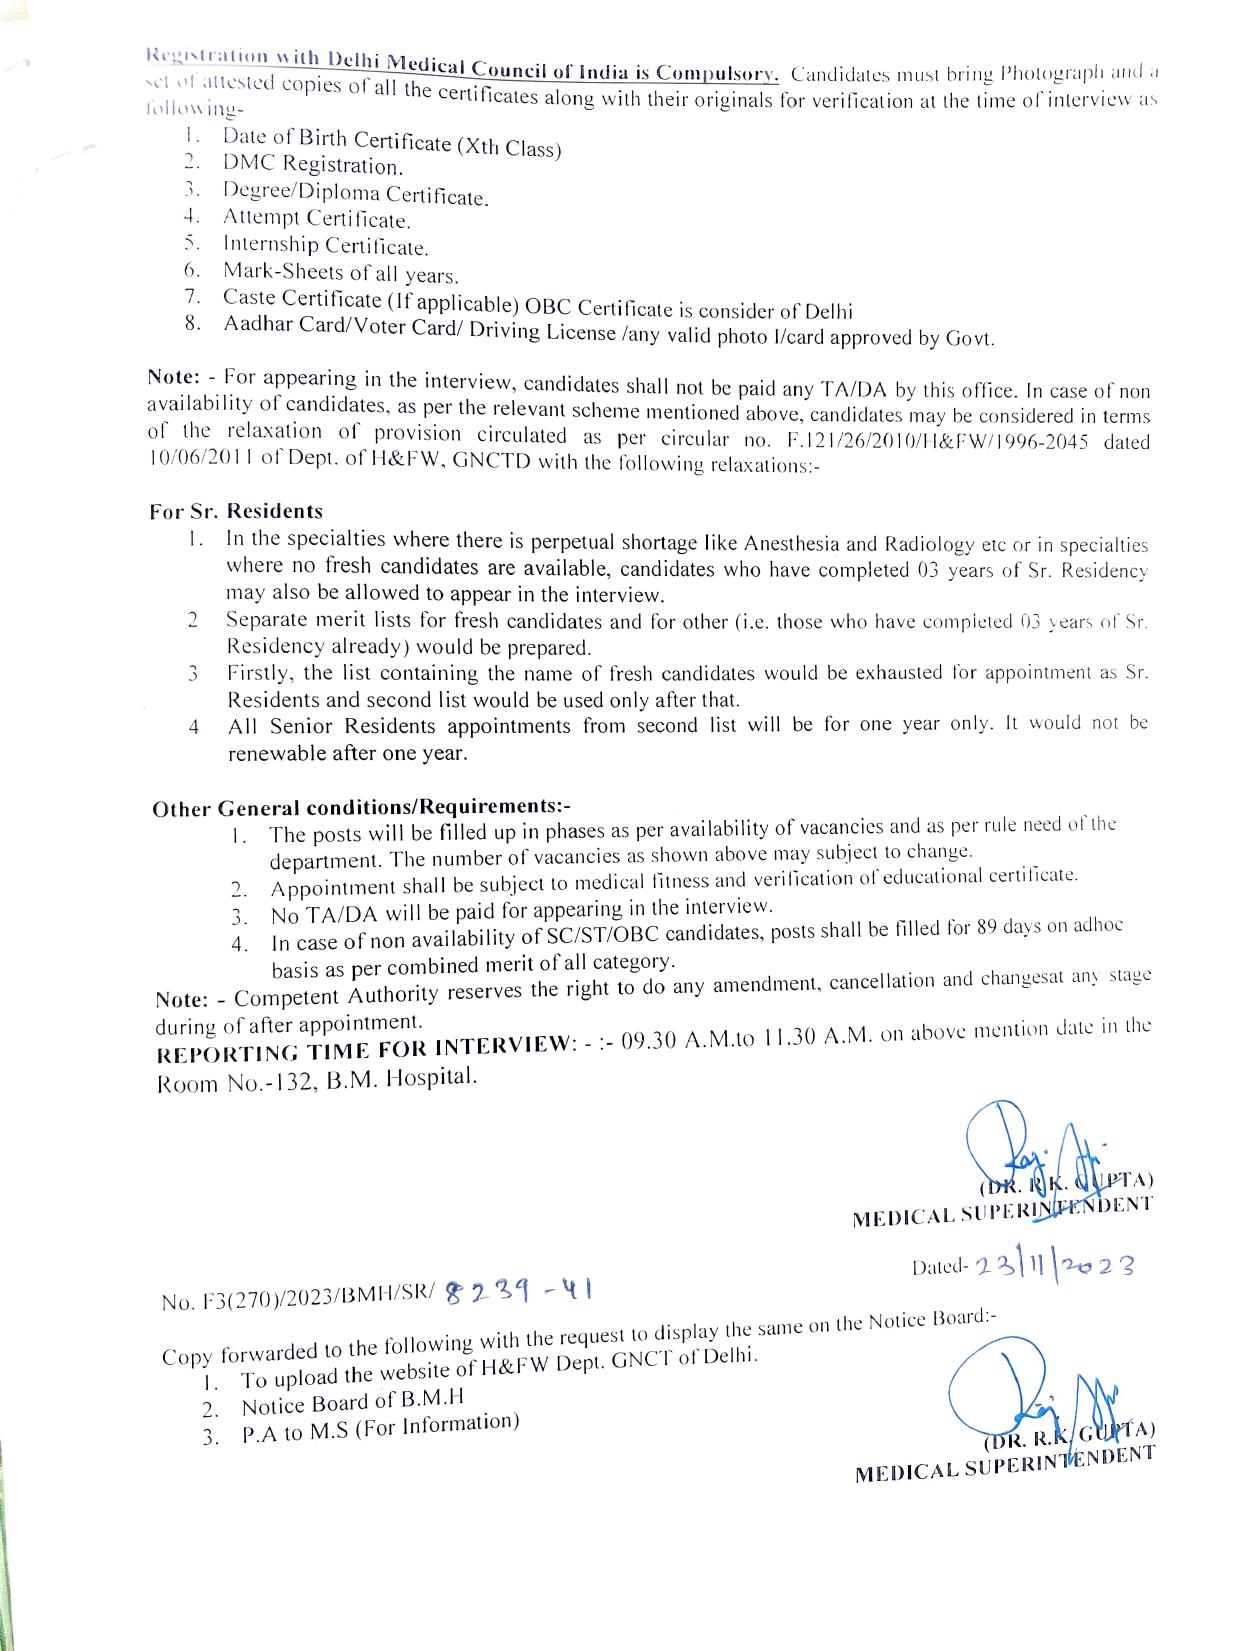 Bhagwan Mahavir Hospital Senior Resident Recruitment 2023 - Page 1